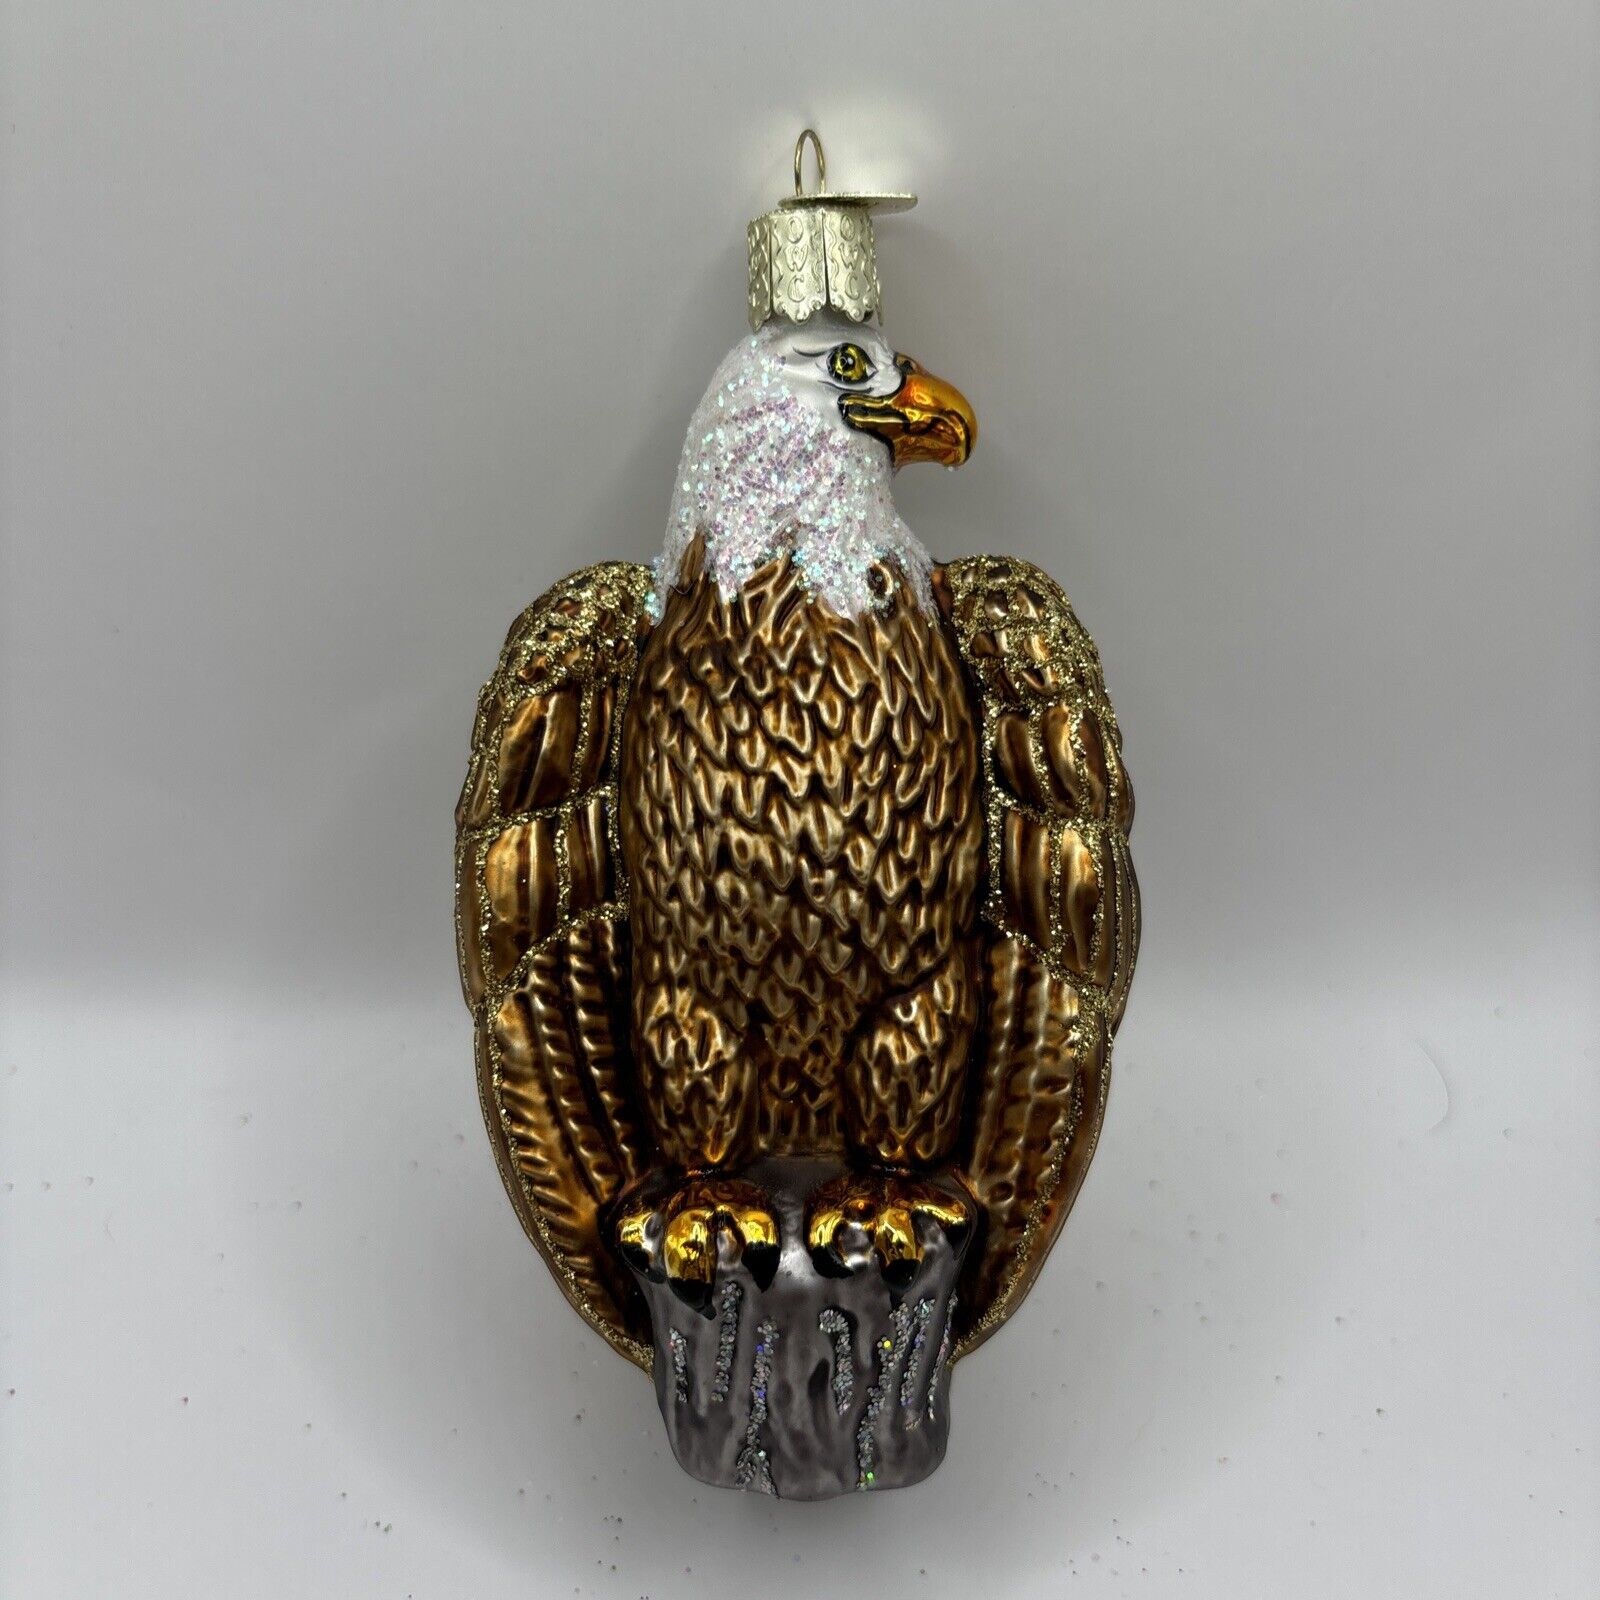 Blown Glass Merck Family Old World Christmas Ornament Bald Eagle 2001